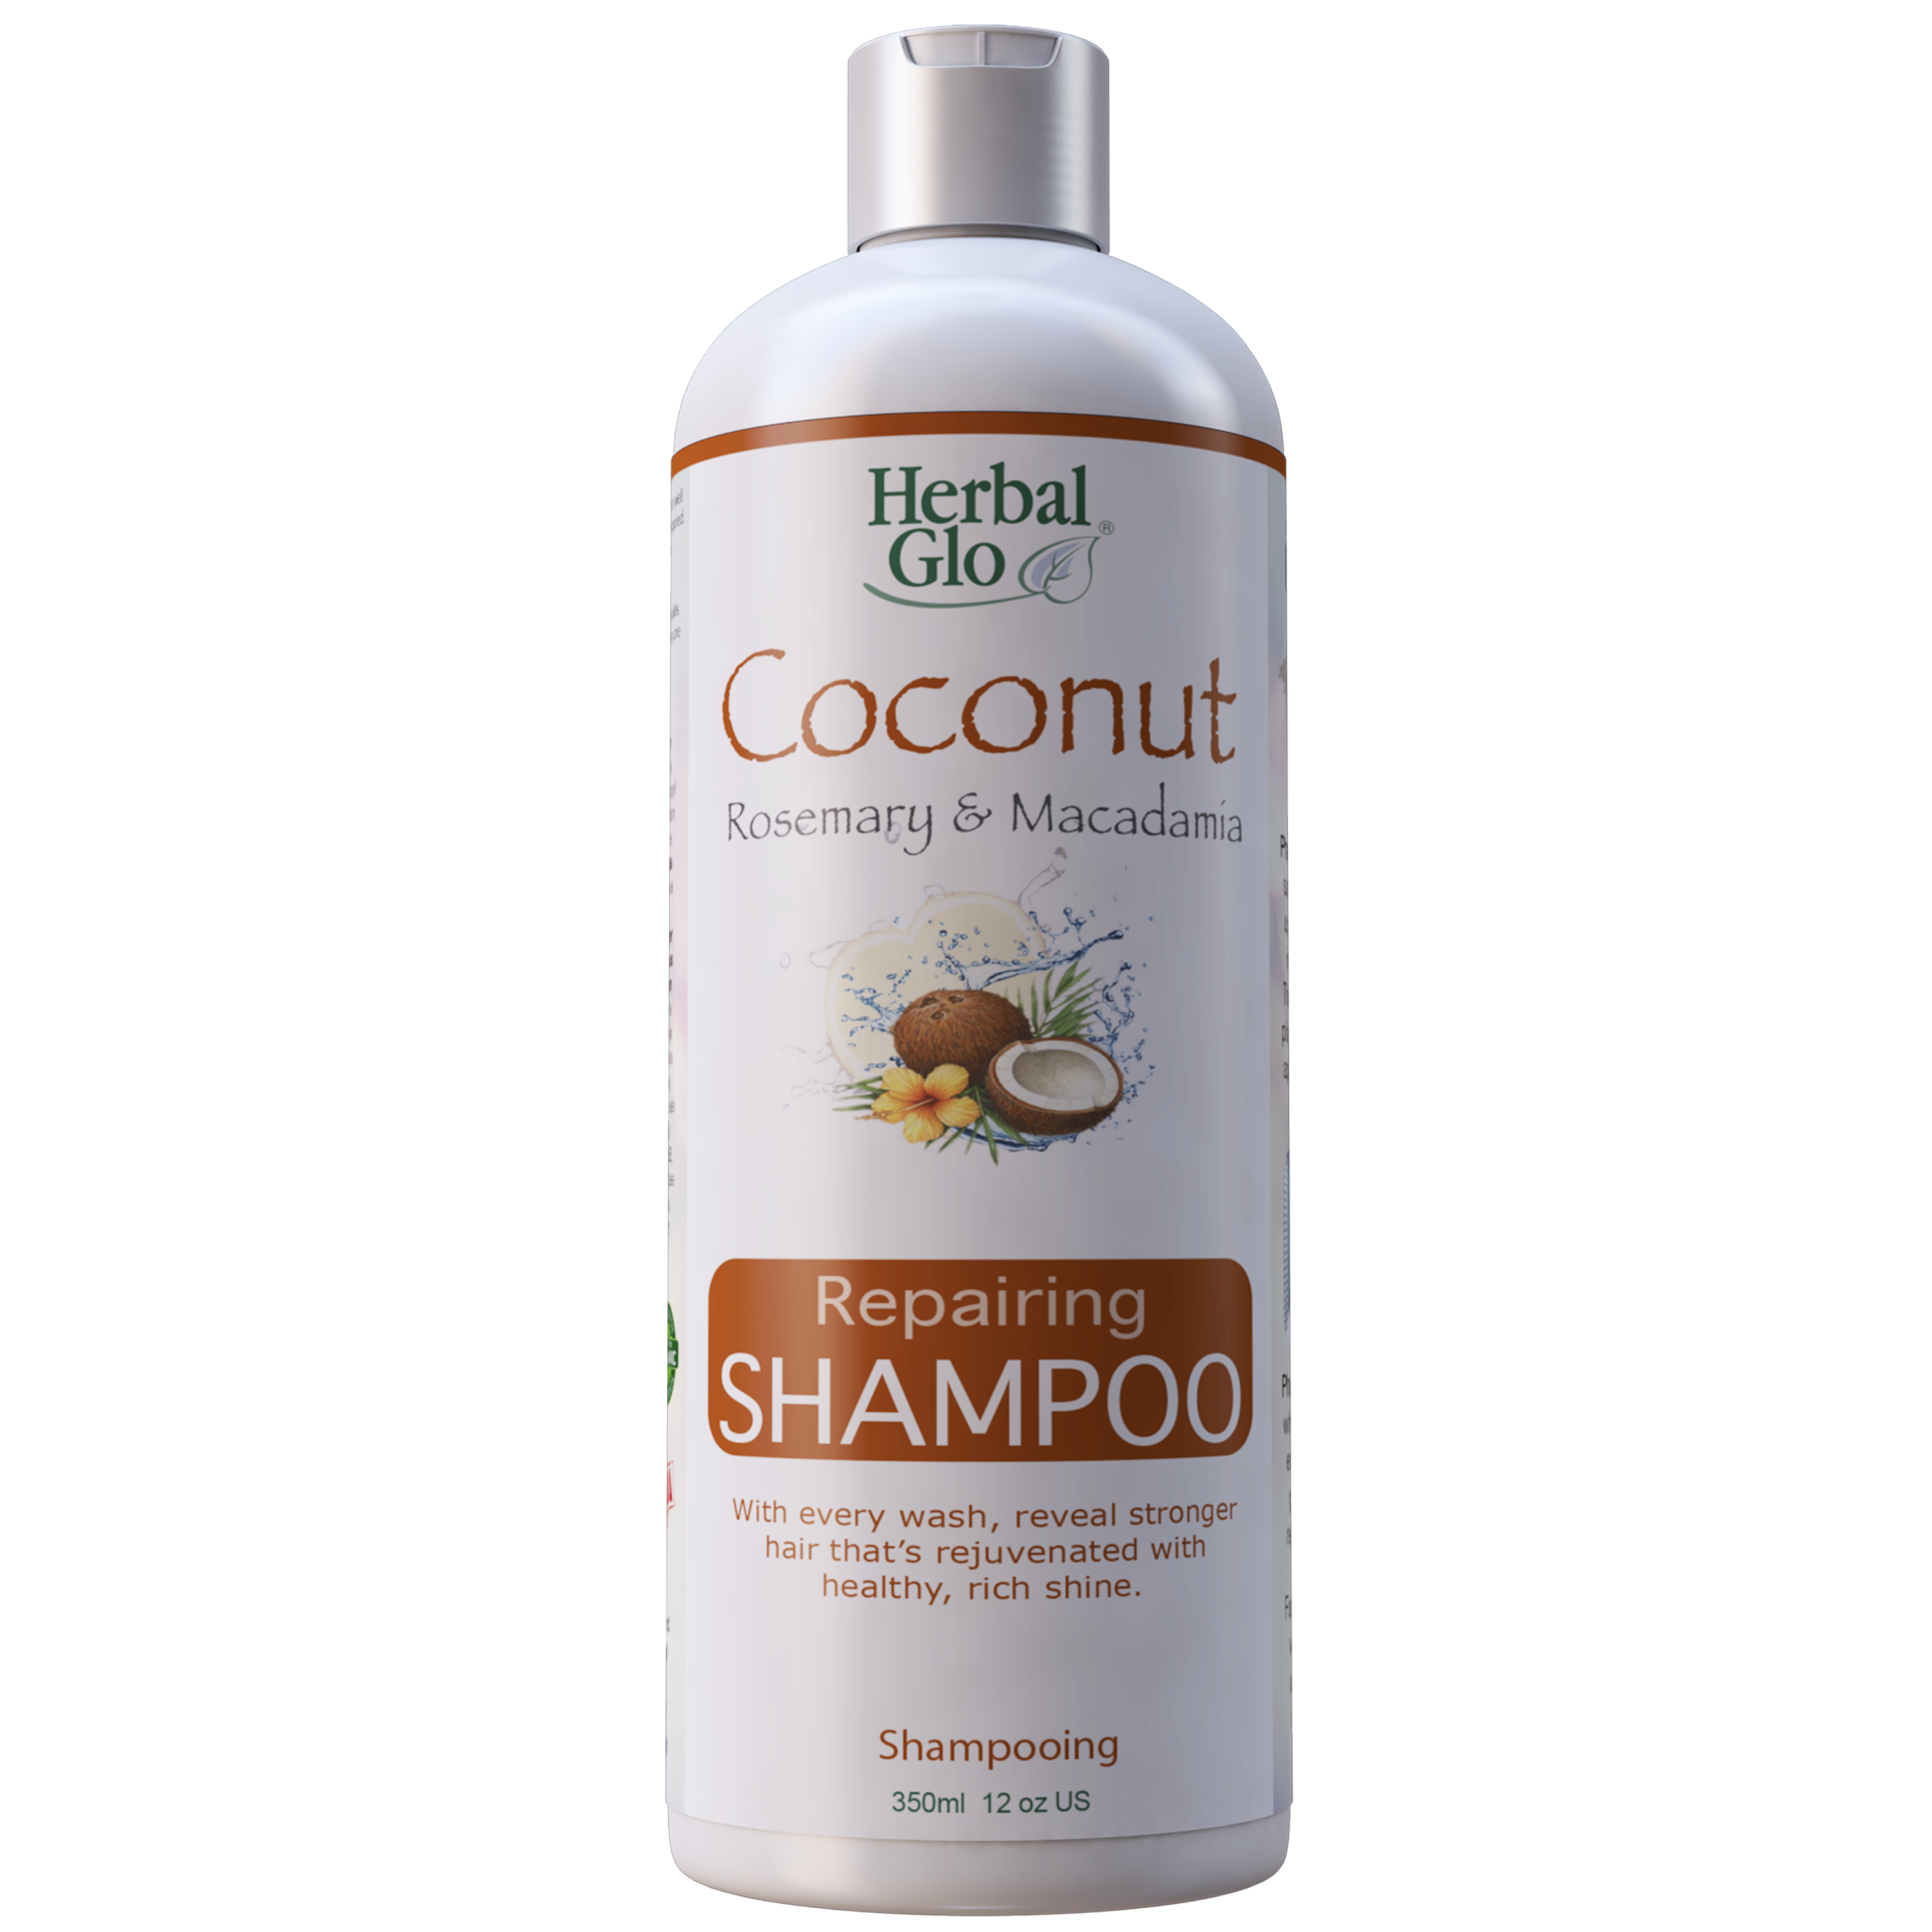 bottle of coconut rosemary macadamia repairing shampoo